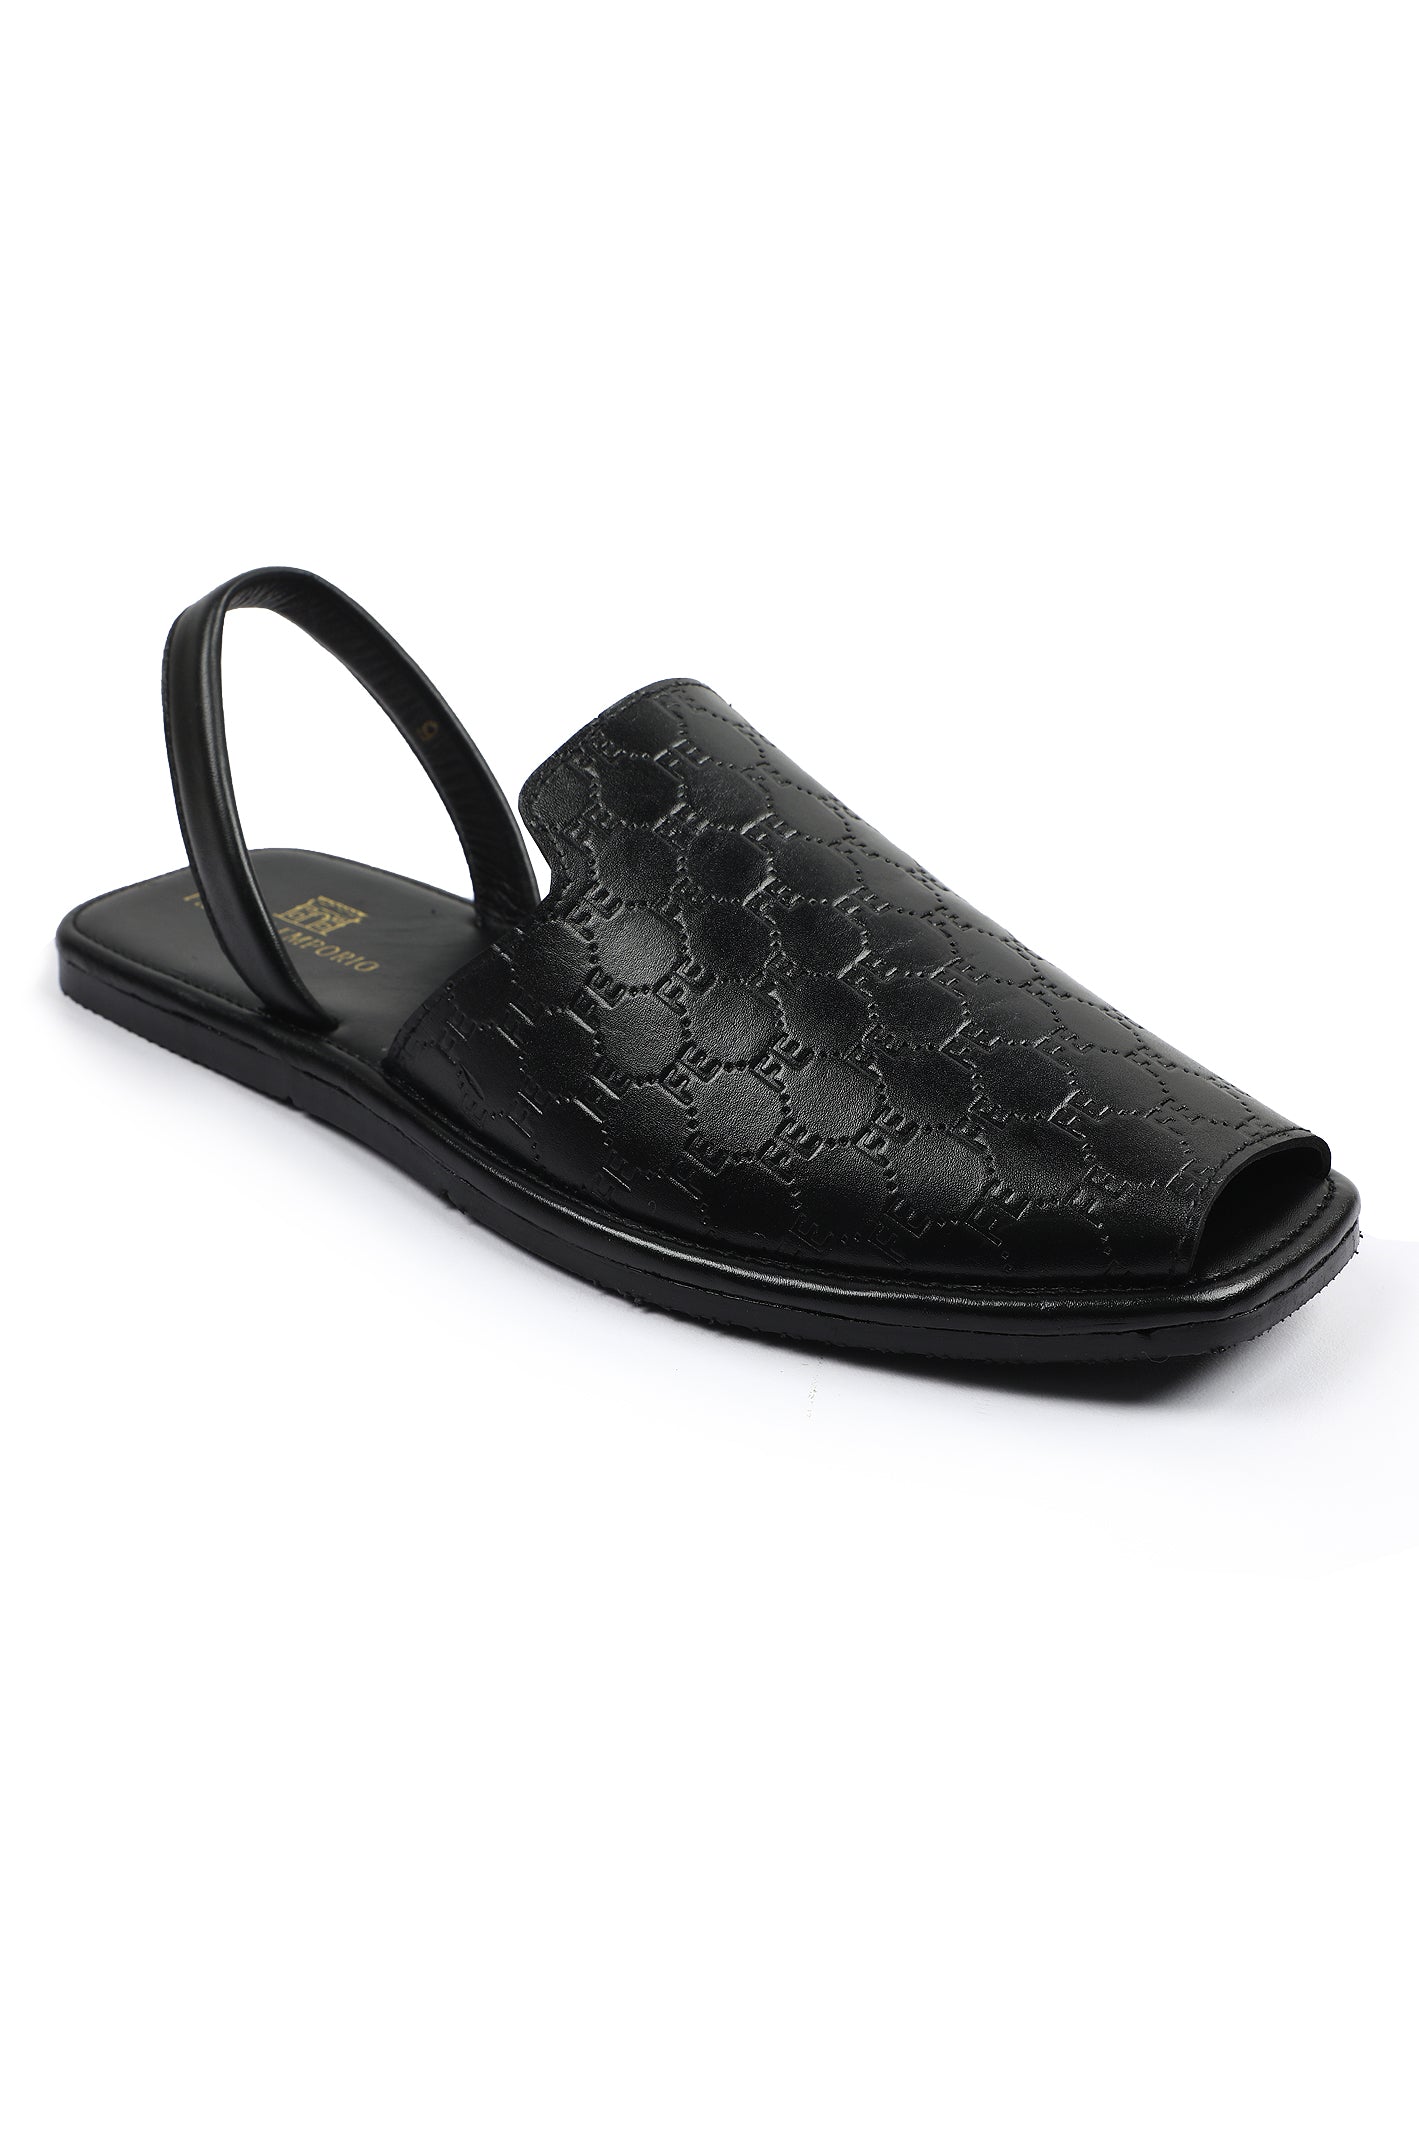 French Emporio Men's Sandal SKU: SLD-0039-BLACK - Diners